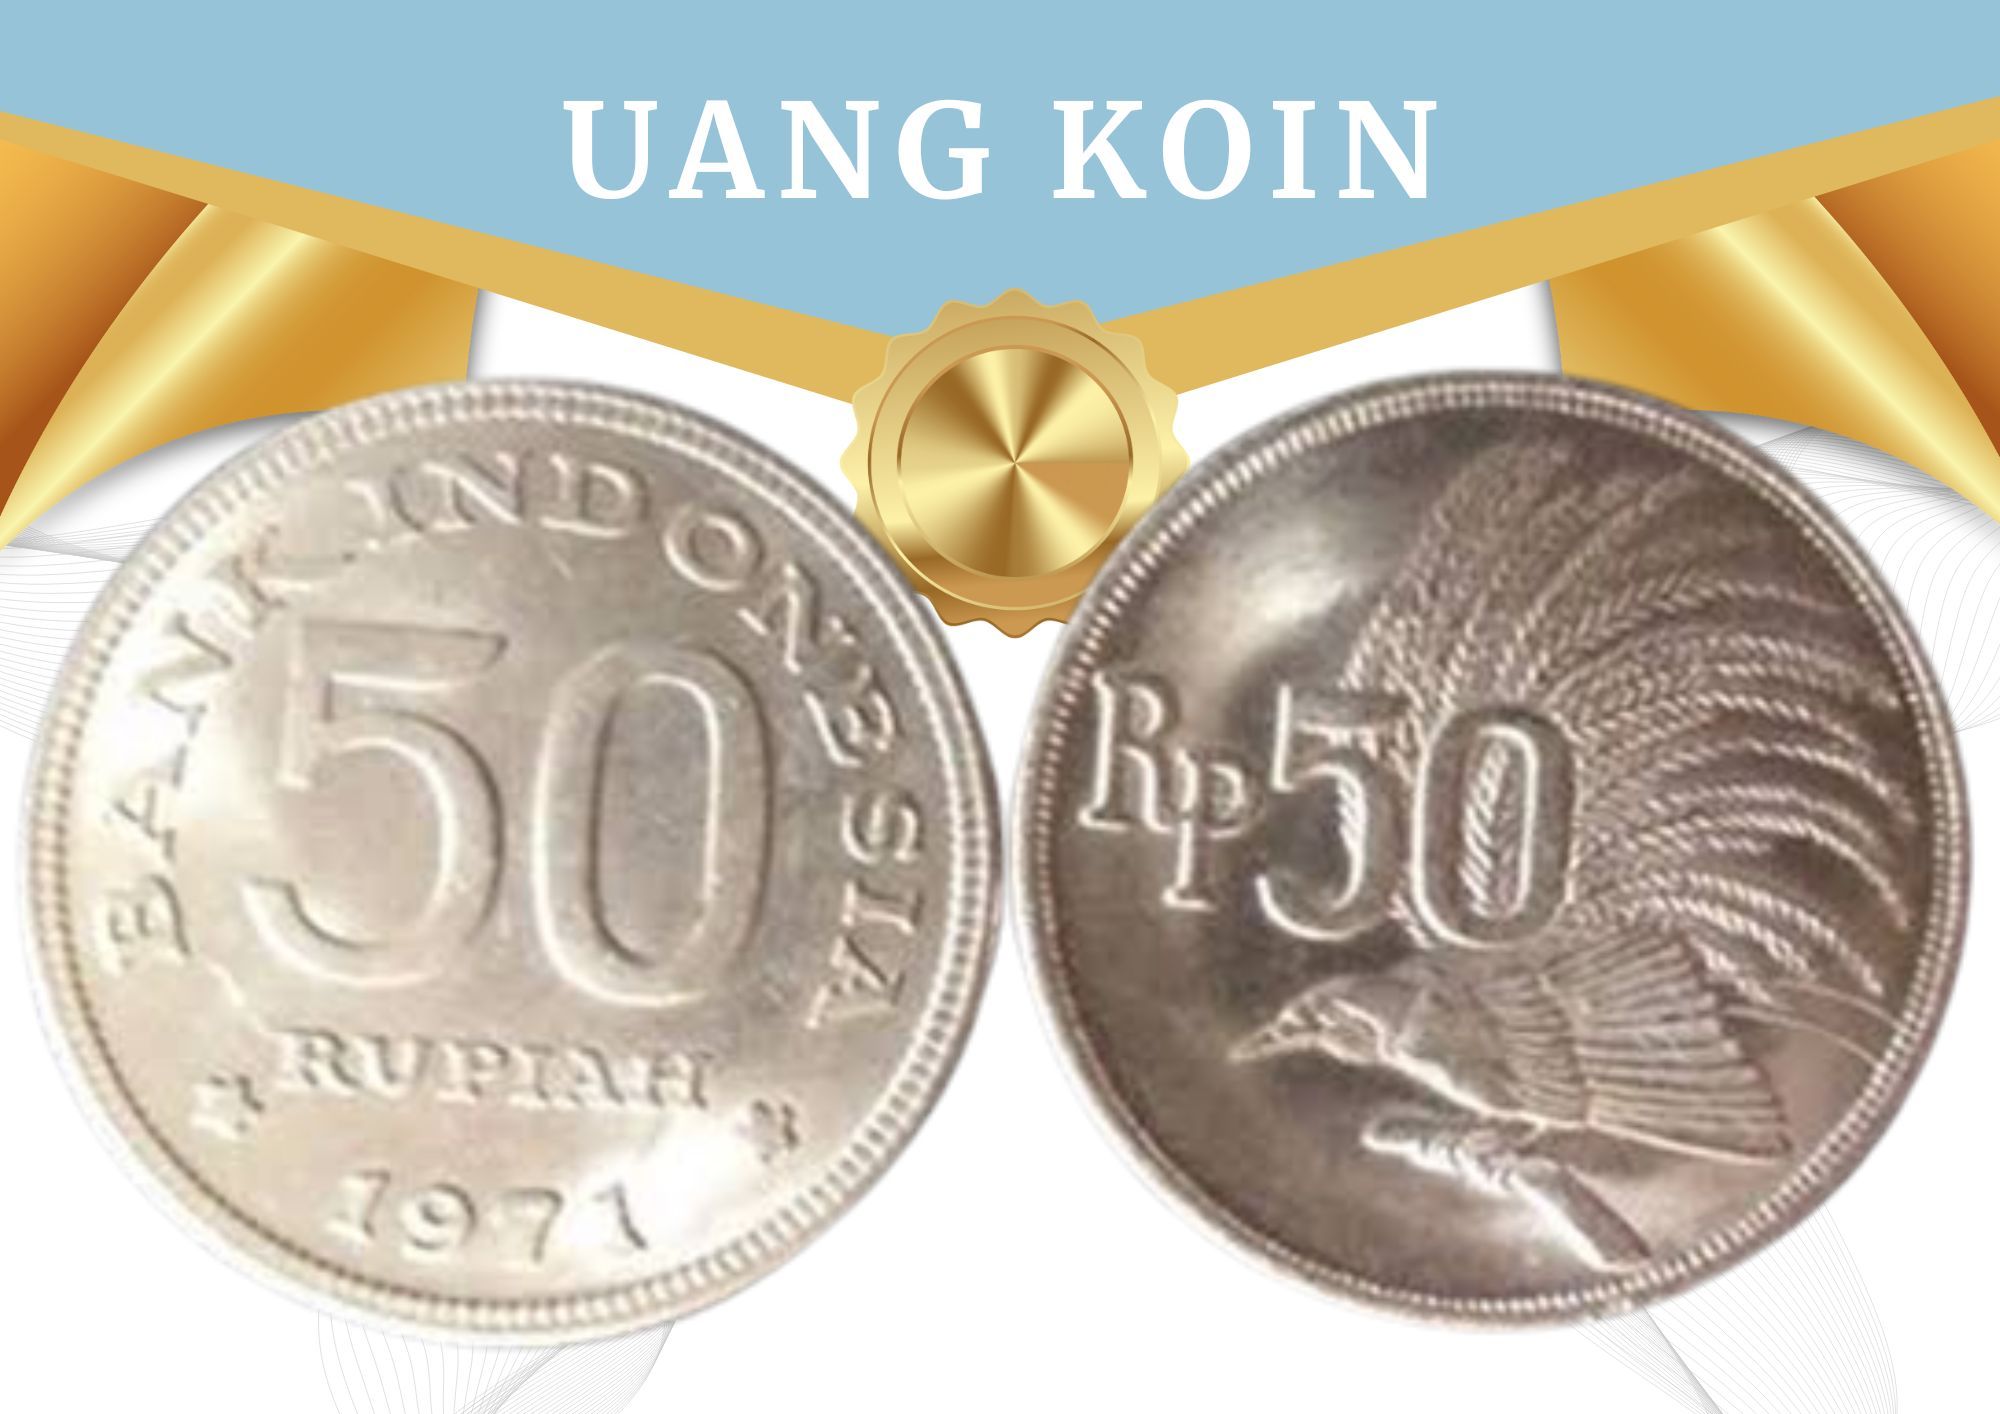 Uang Koin Rp 50 Tahun Emisi 1971